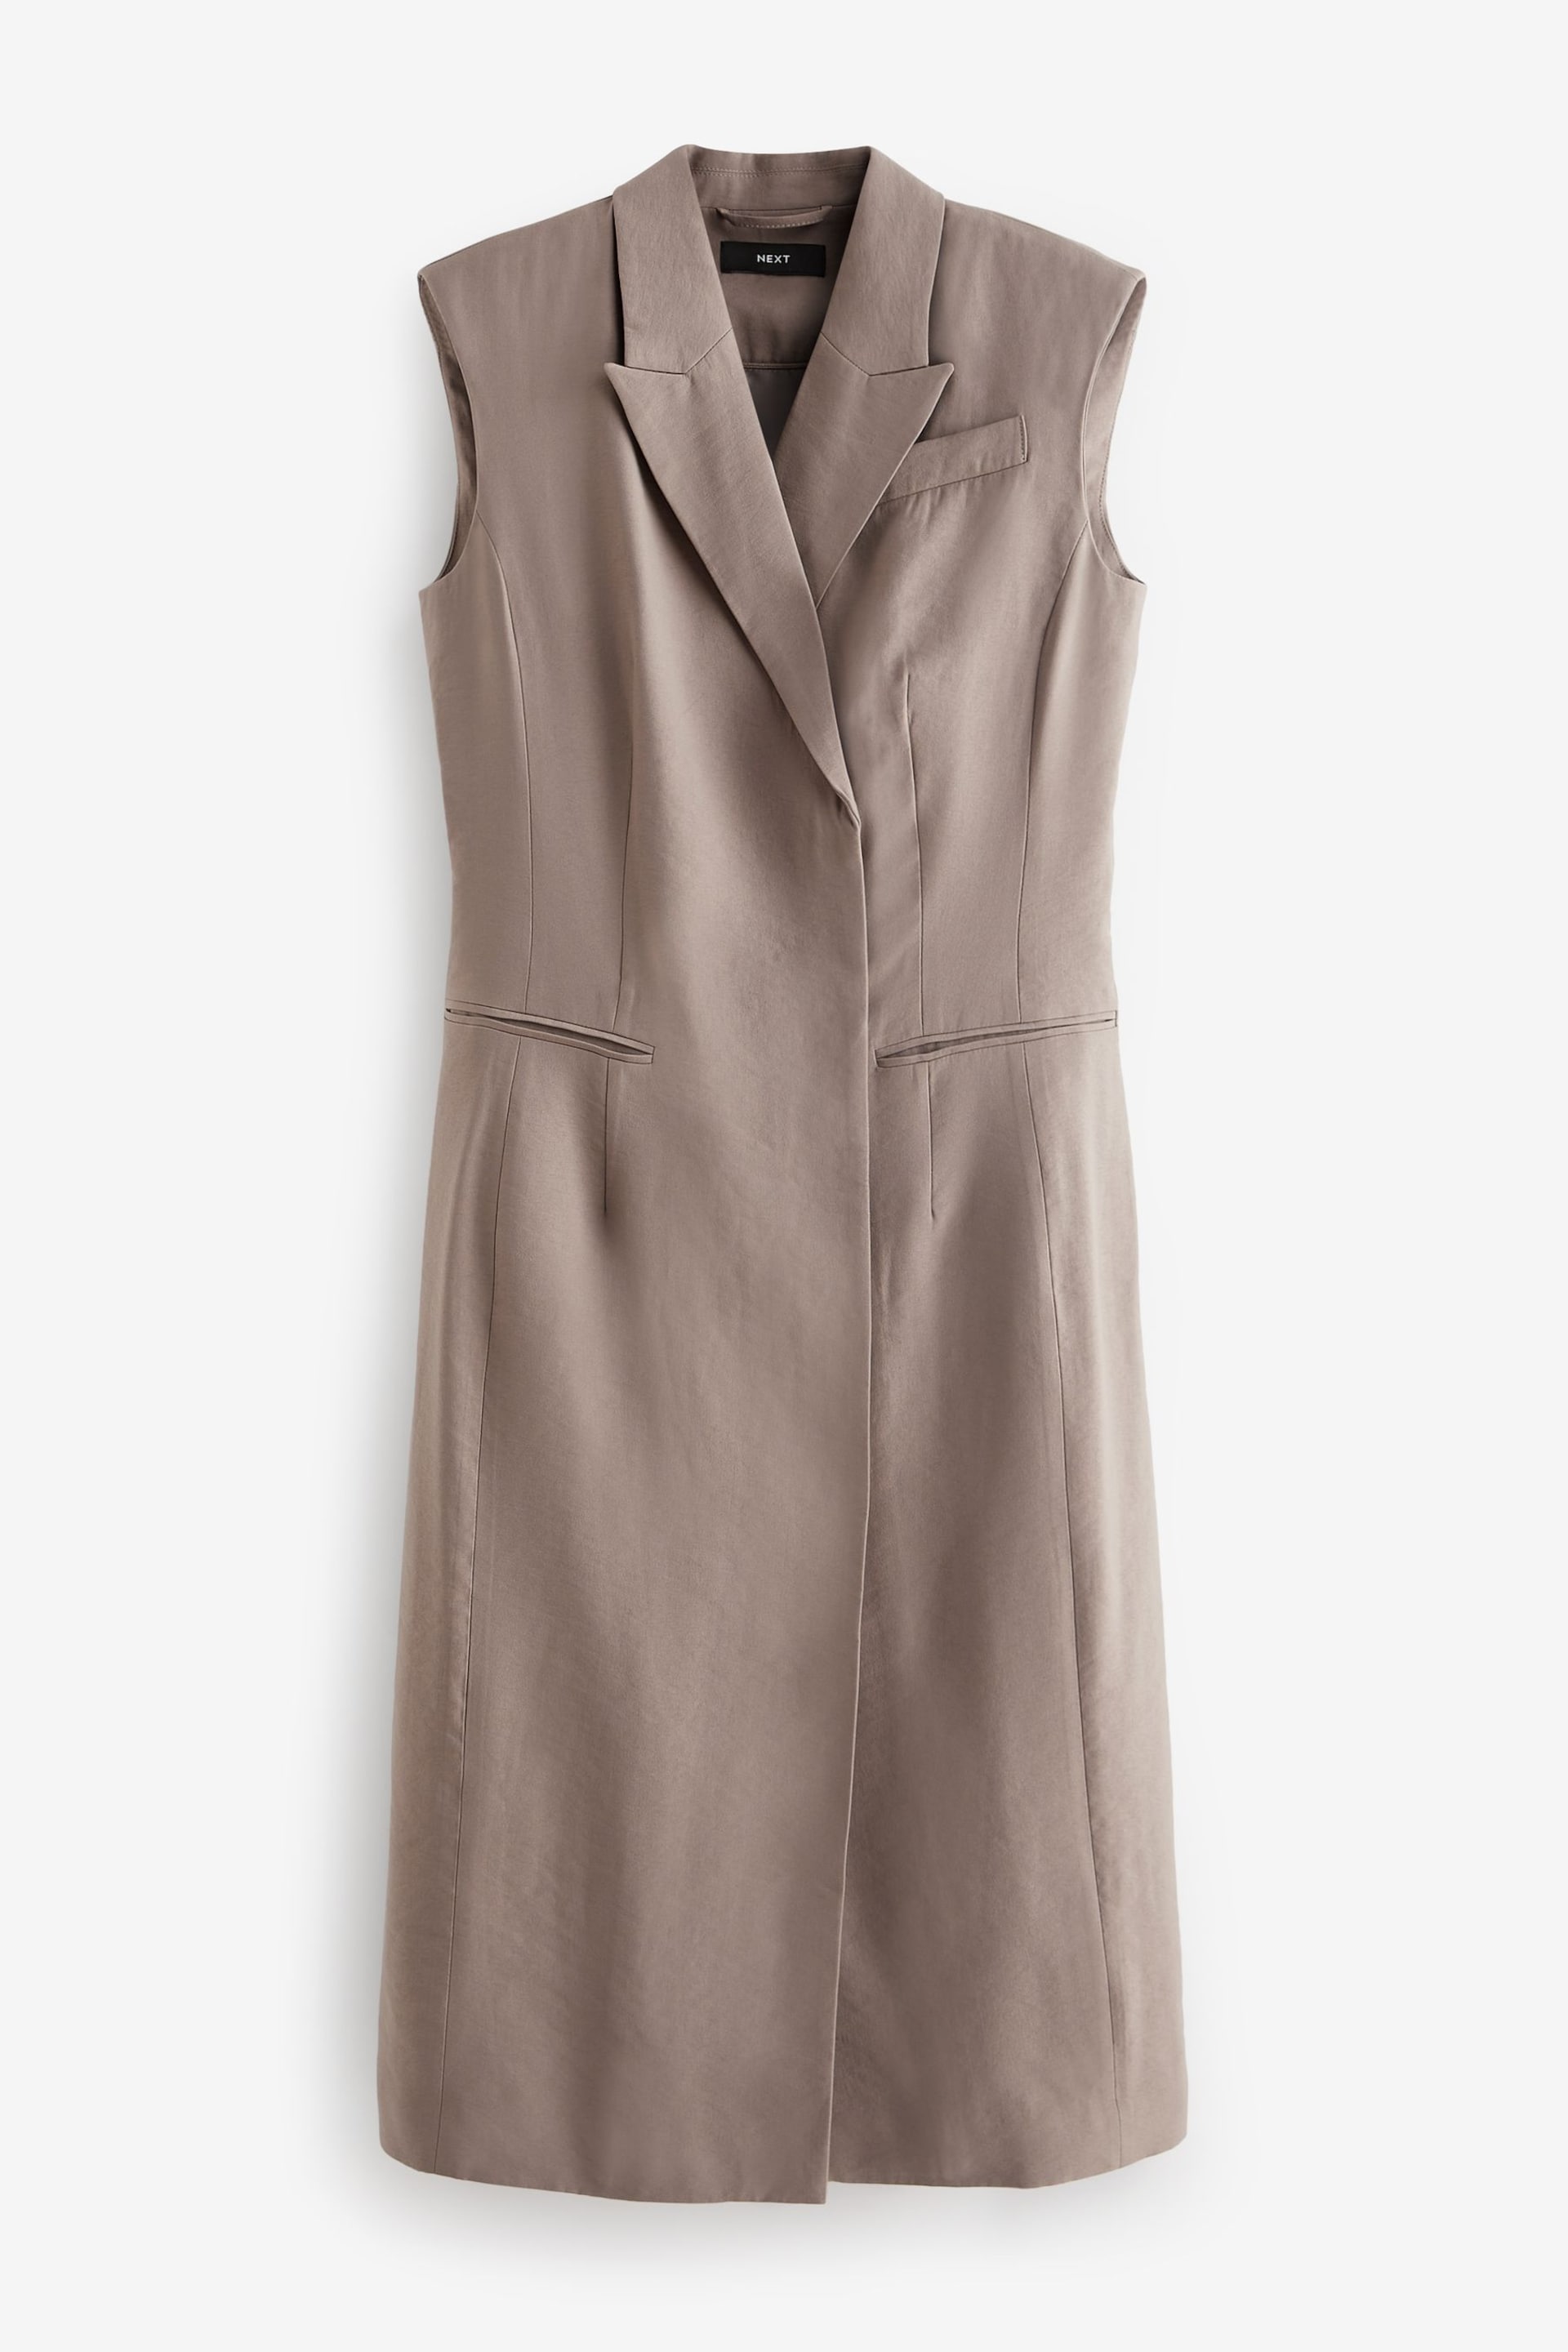 Mink Brown Mini Sleeveless Blazer Dress - Image 4 of 5